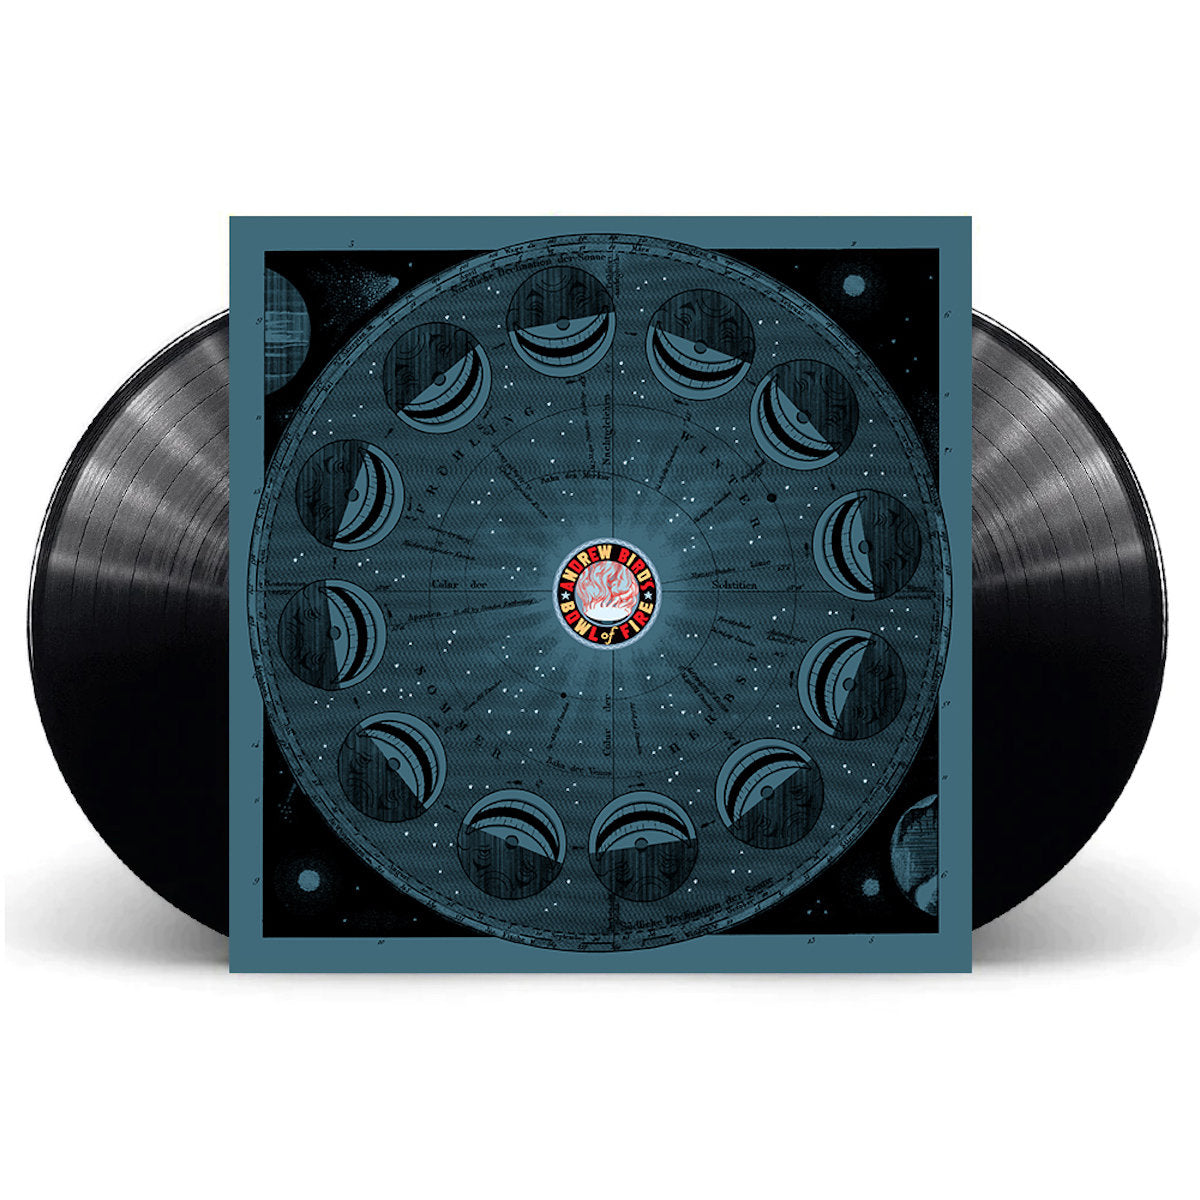 Andrew Bird's Bowl of Fire: Oh! The Grandeur Vinyl LP